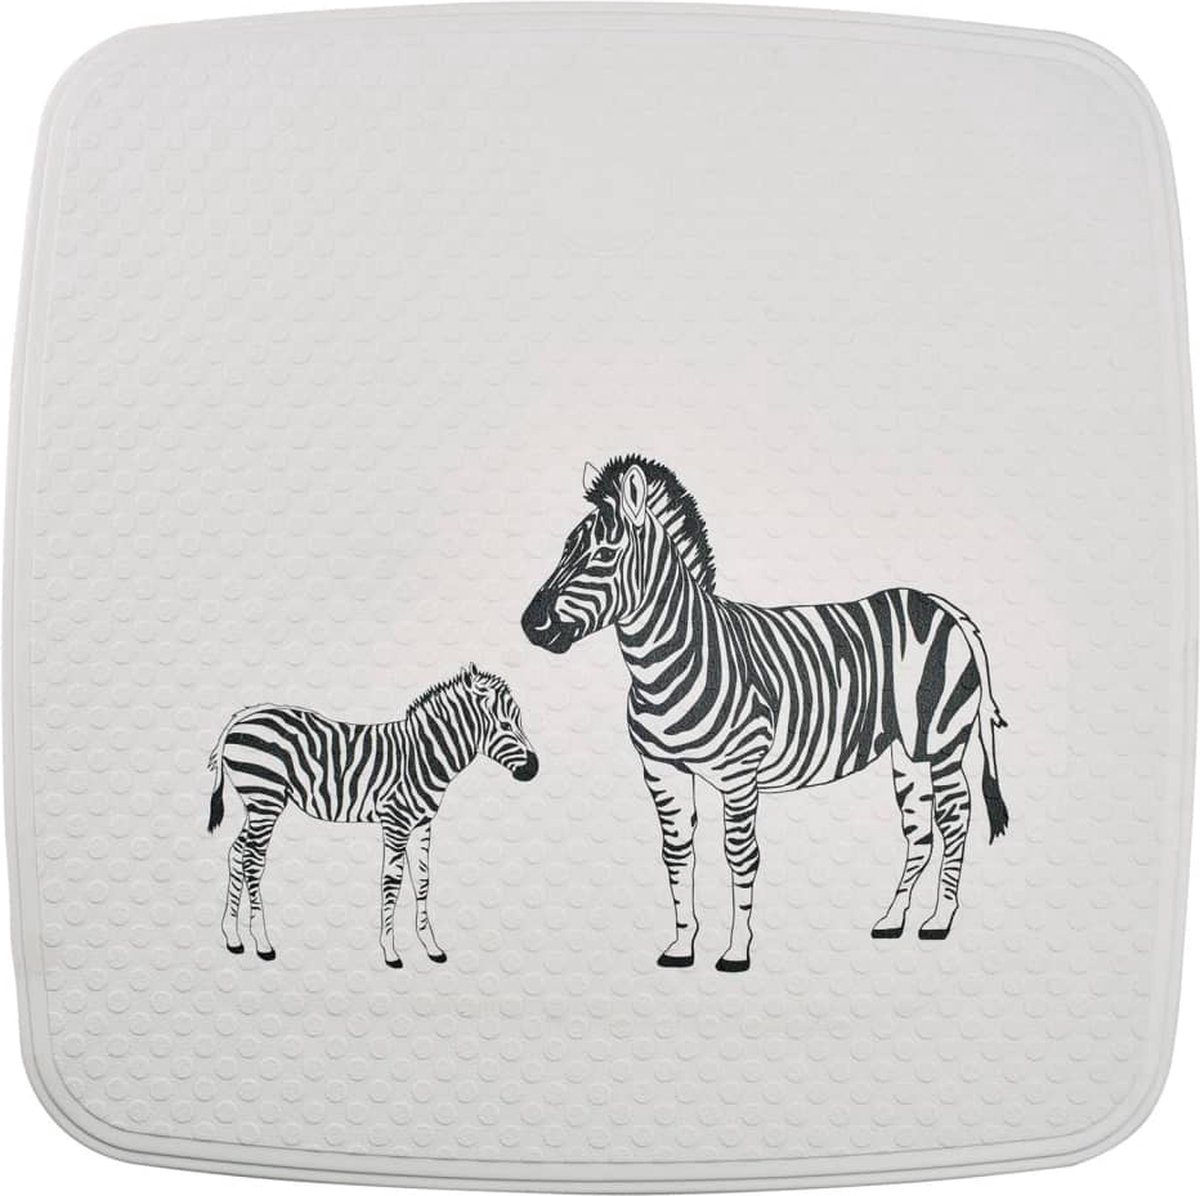 RIDDER-Douchemat-Zebra-54x54-cm-wit-en-zwart